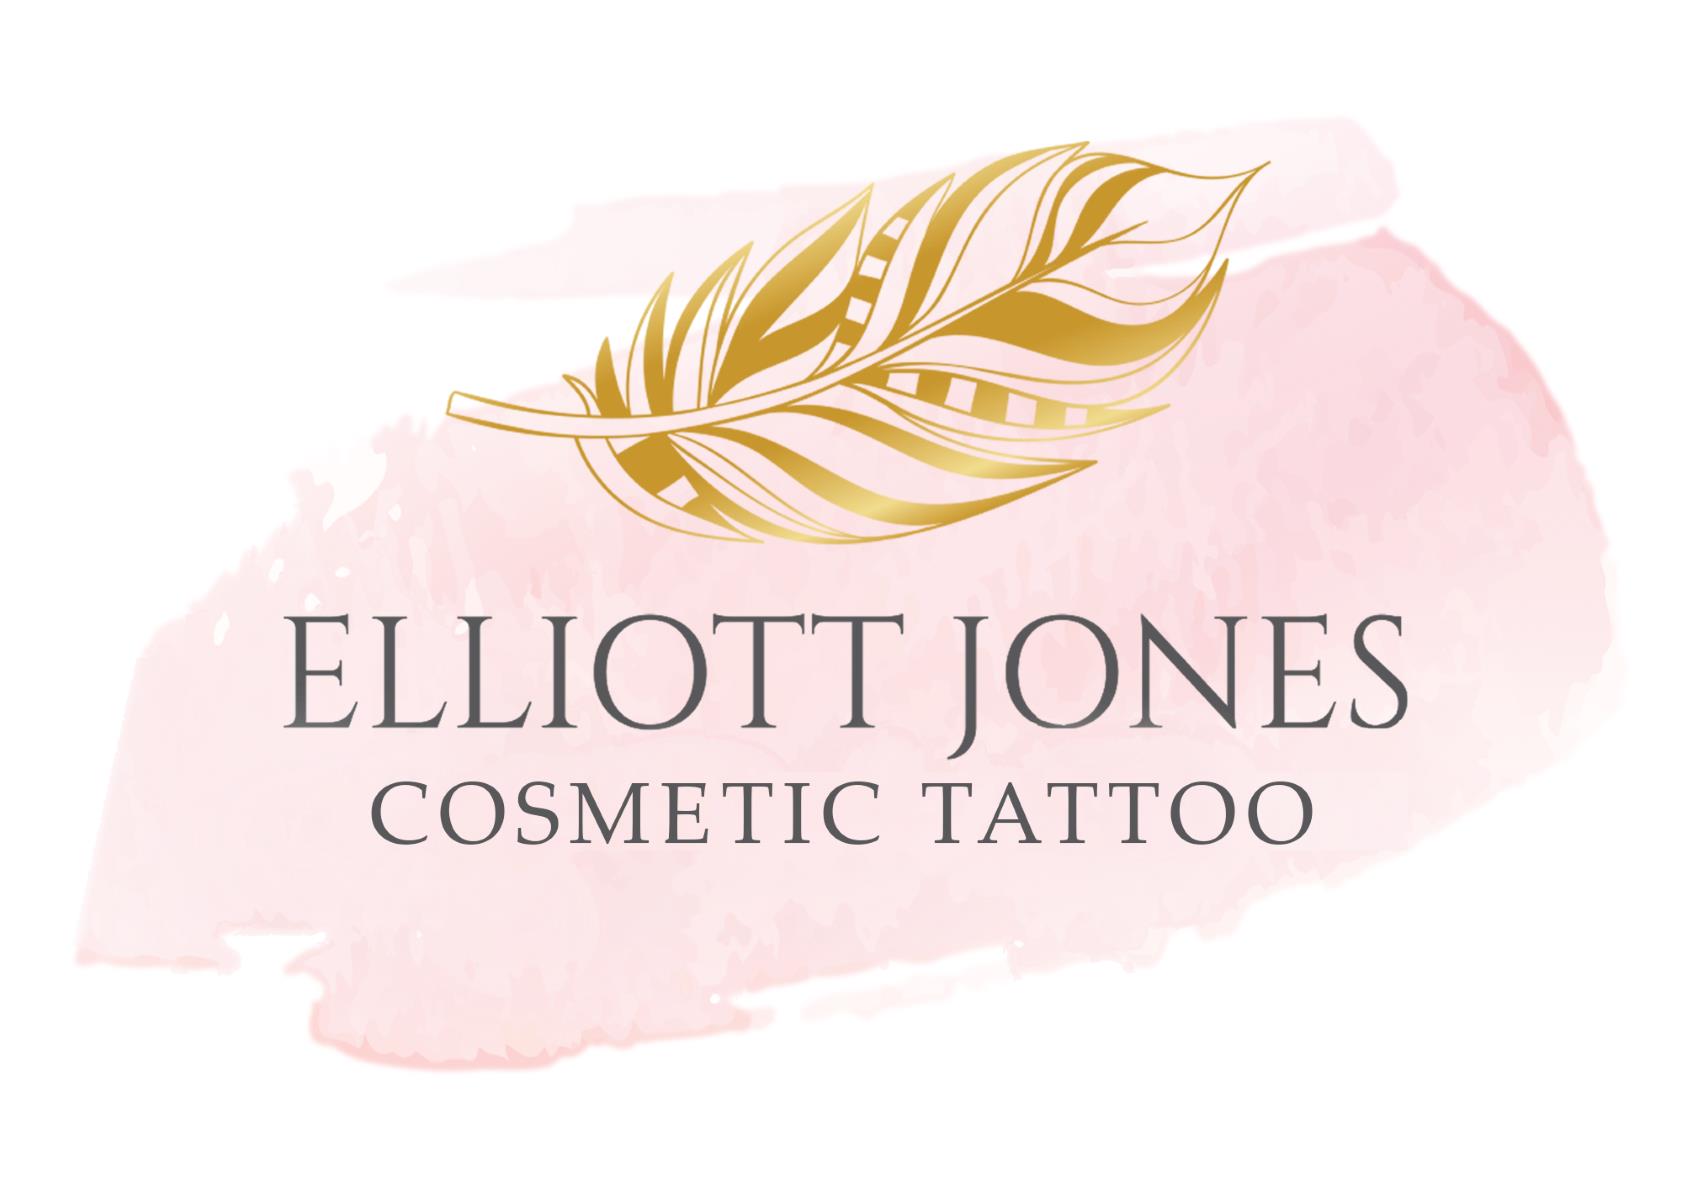 Elliott-Jones Cosmetic Tattoo 